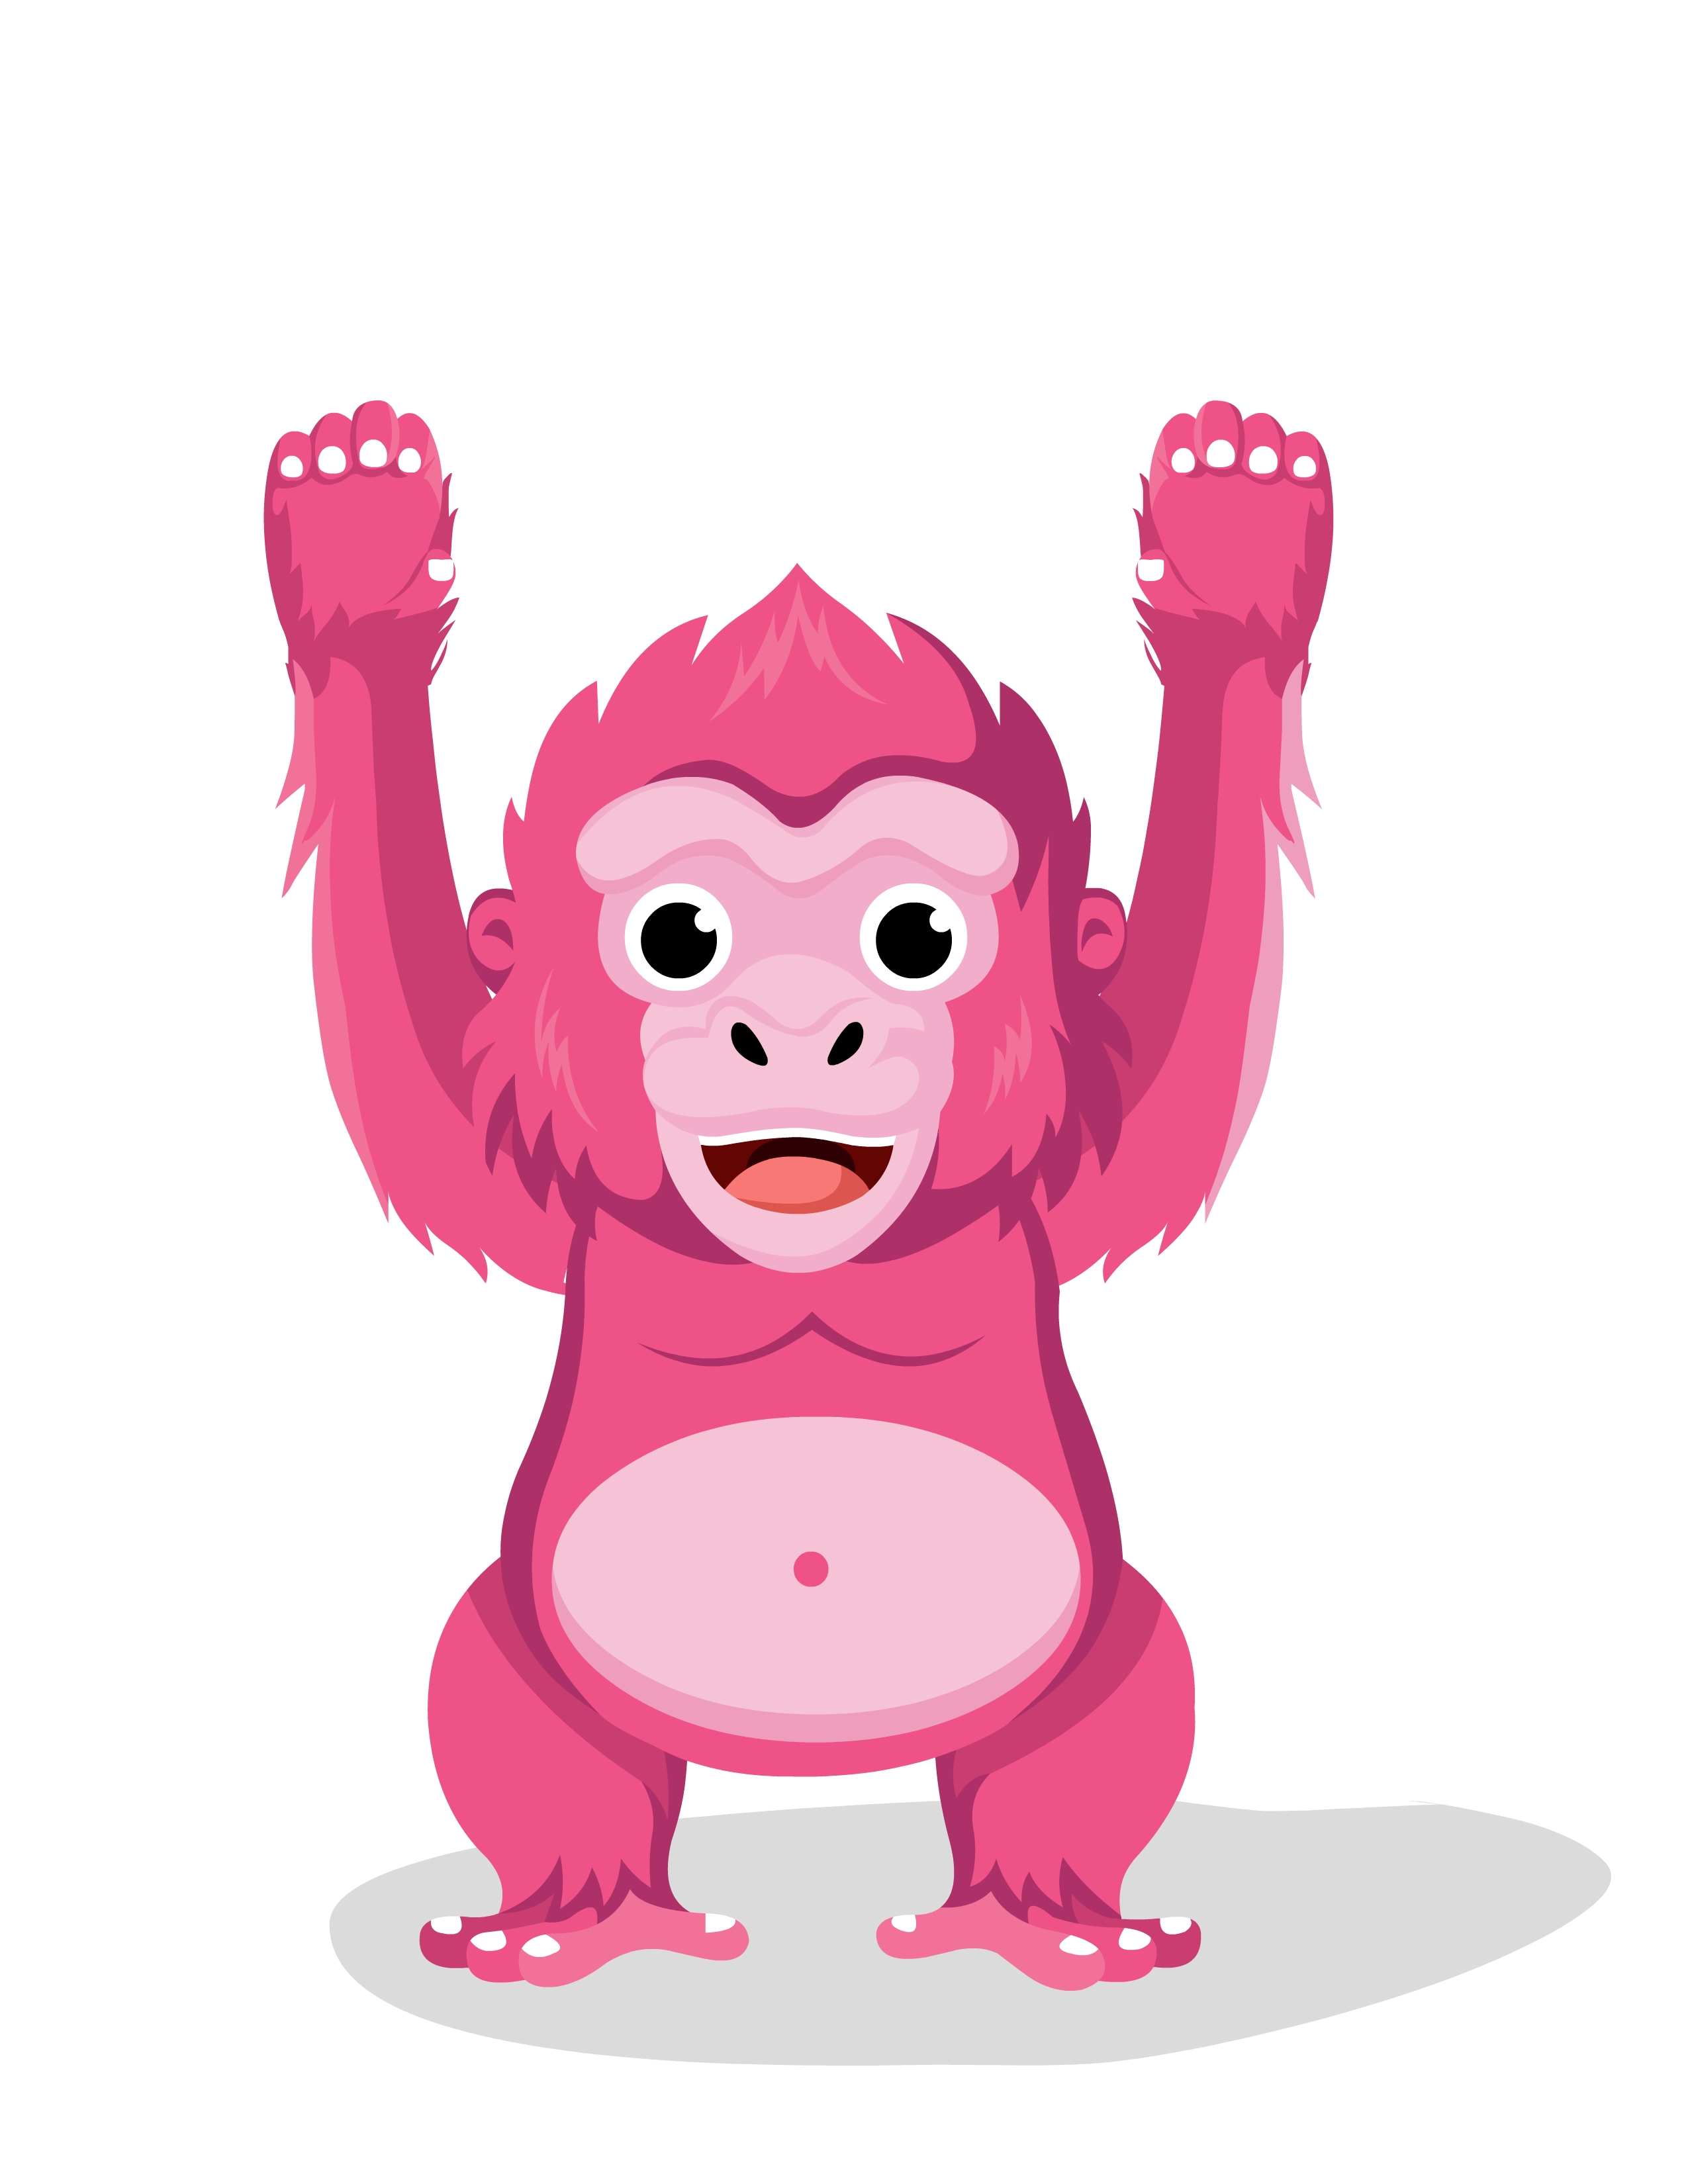 hands up pink gorilla